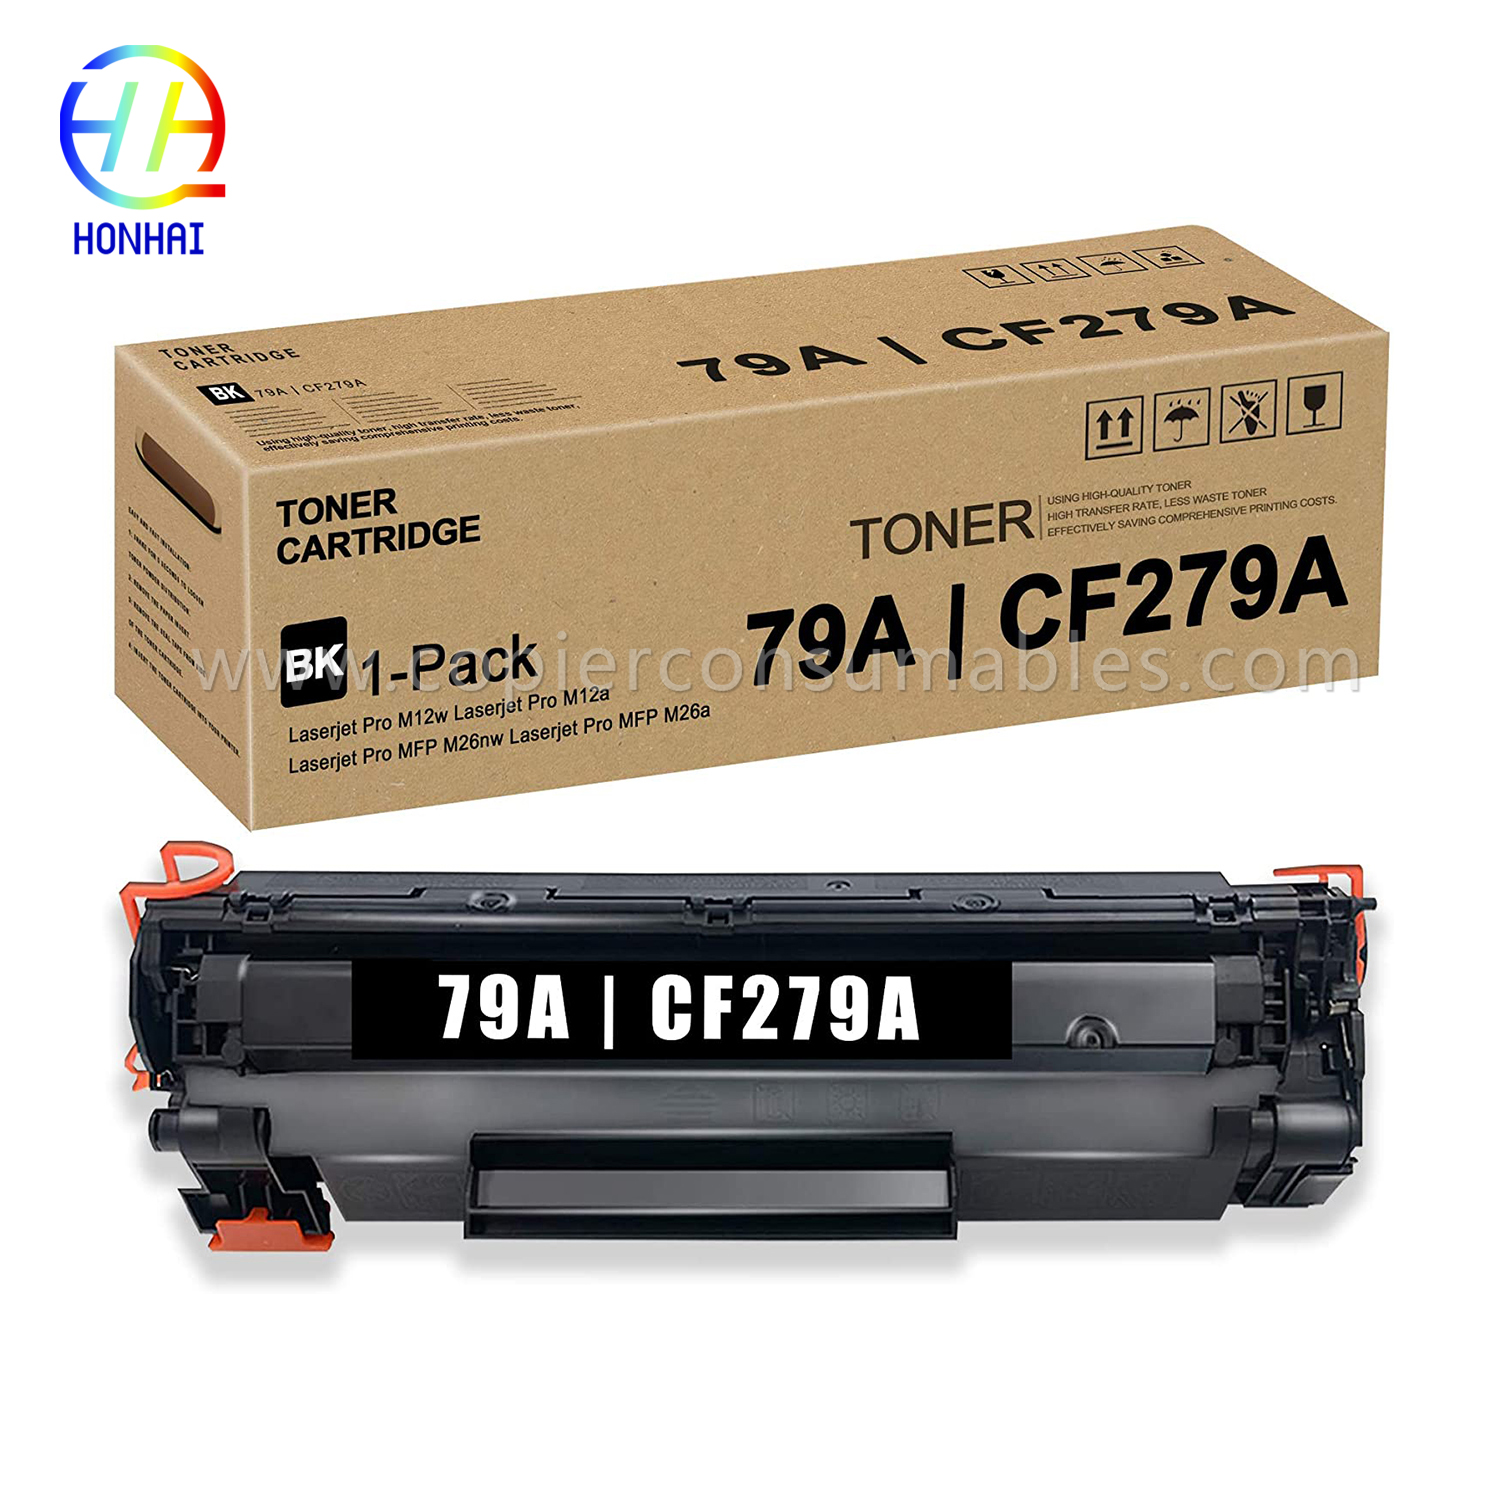 HP Laserjet PRO M12W Mfp M26 M26nw සඳහා Toner Cartridge (CF279A) 拷贝